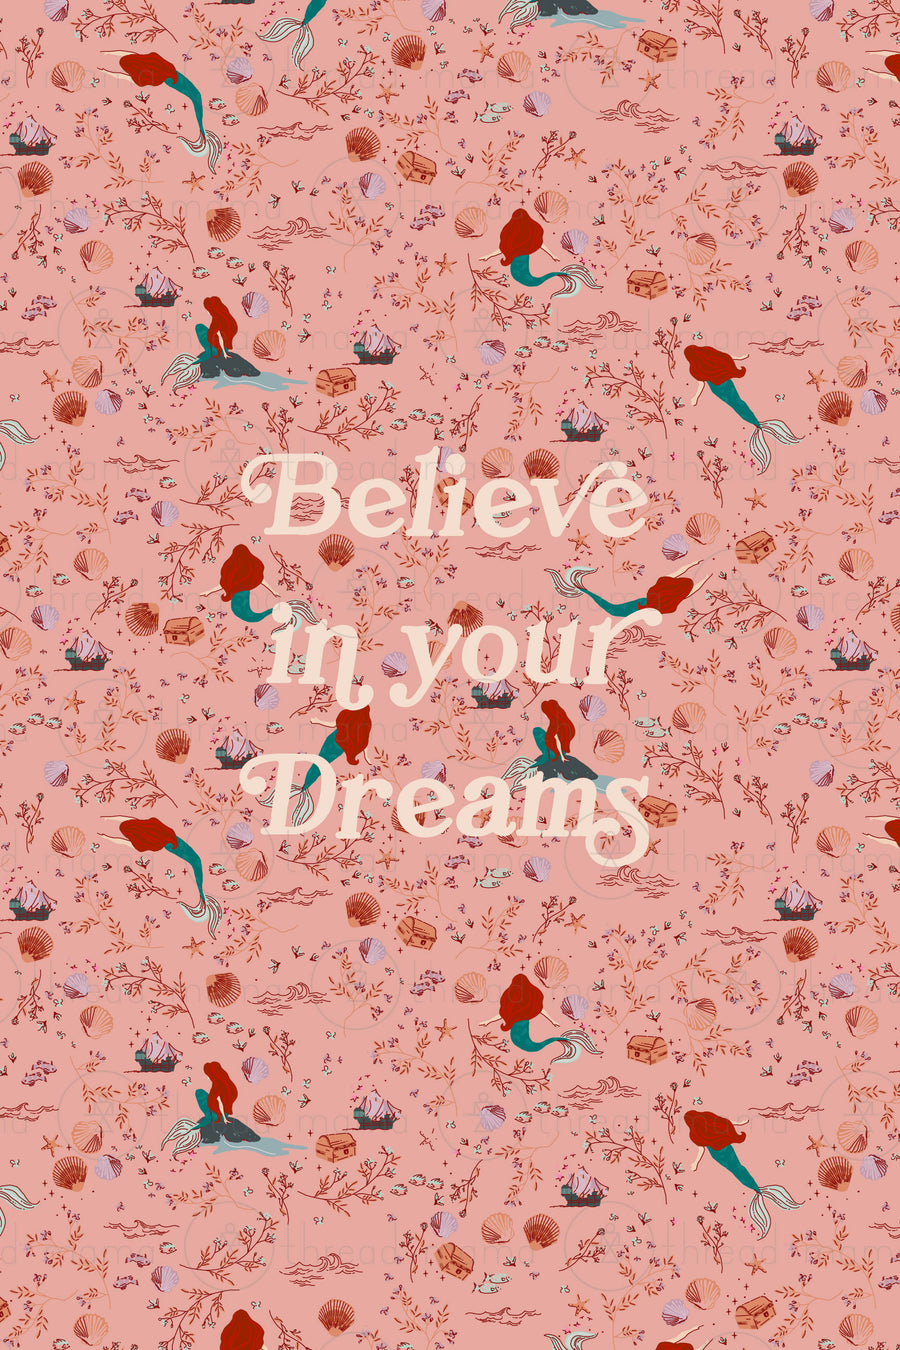 Believe In your Dreams - Set